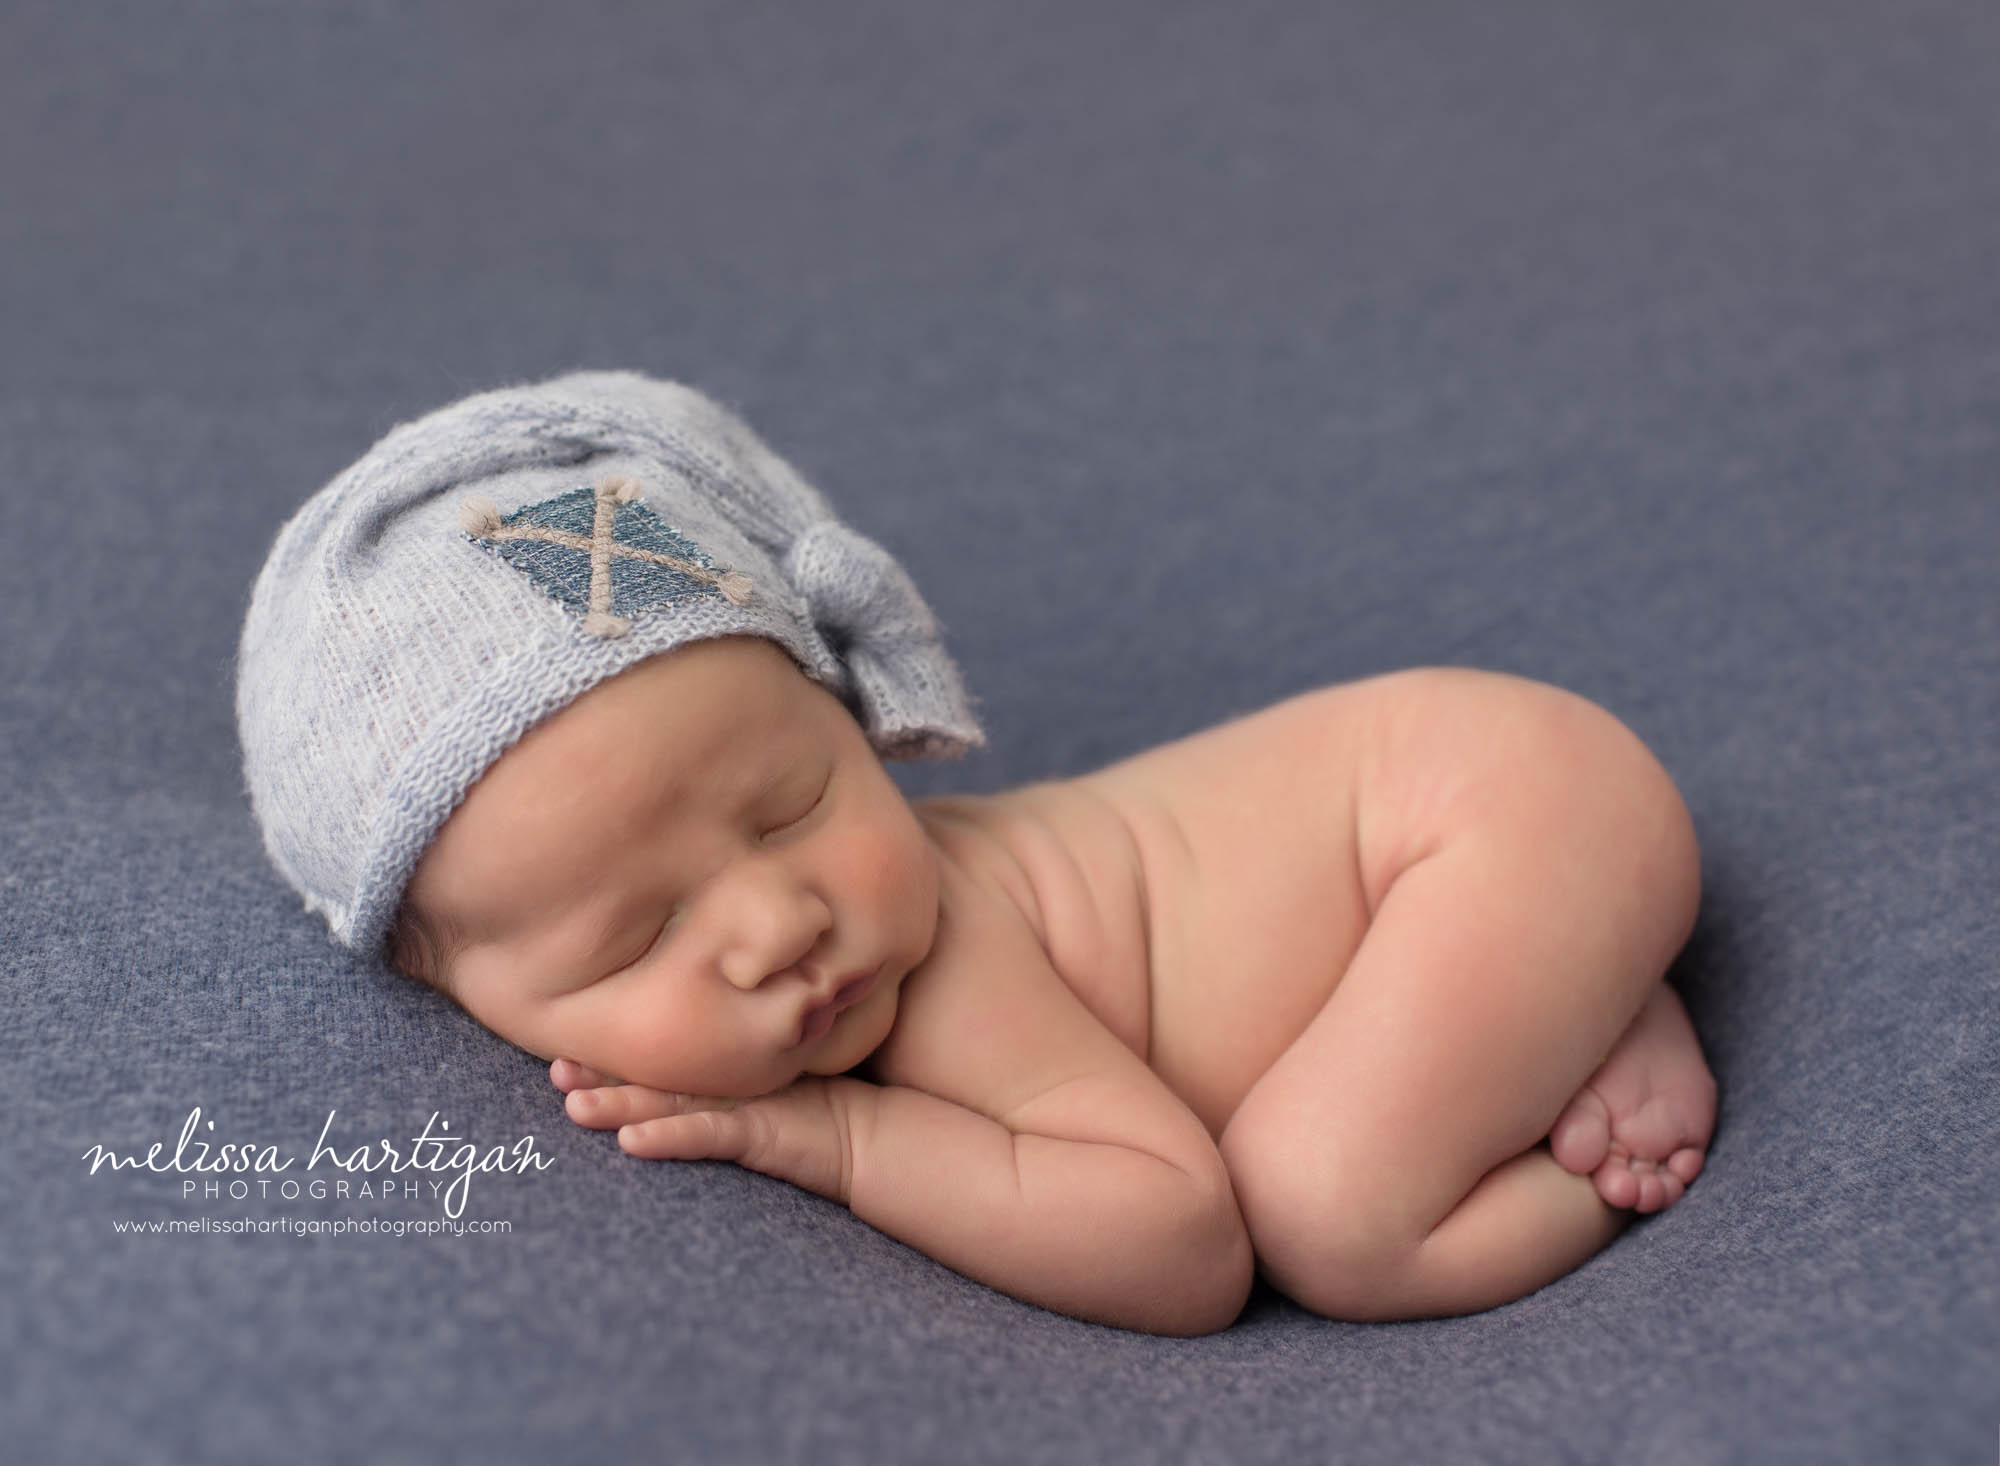 Newborn baby boy posed on tummy bump up with blue sleepy cap